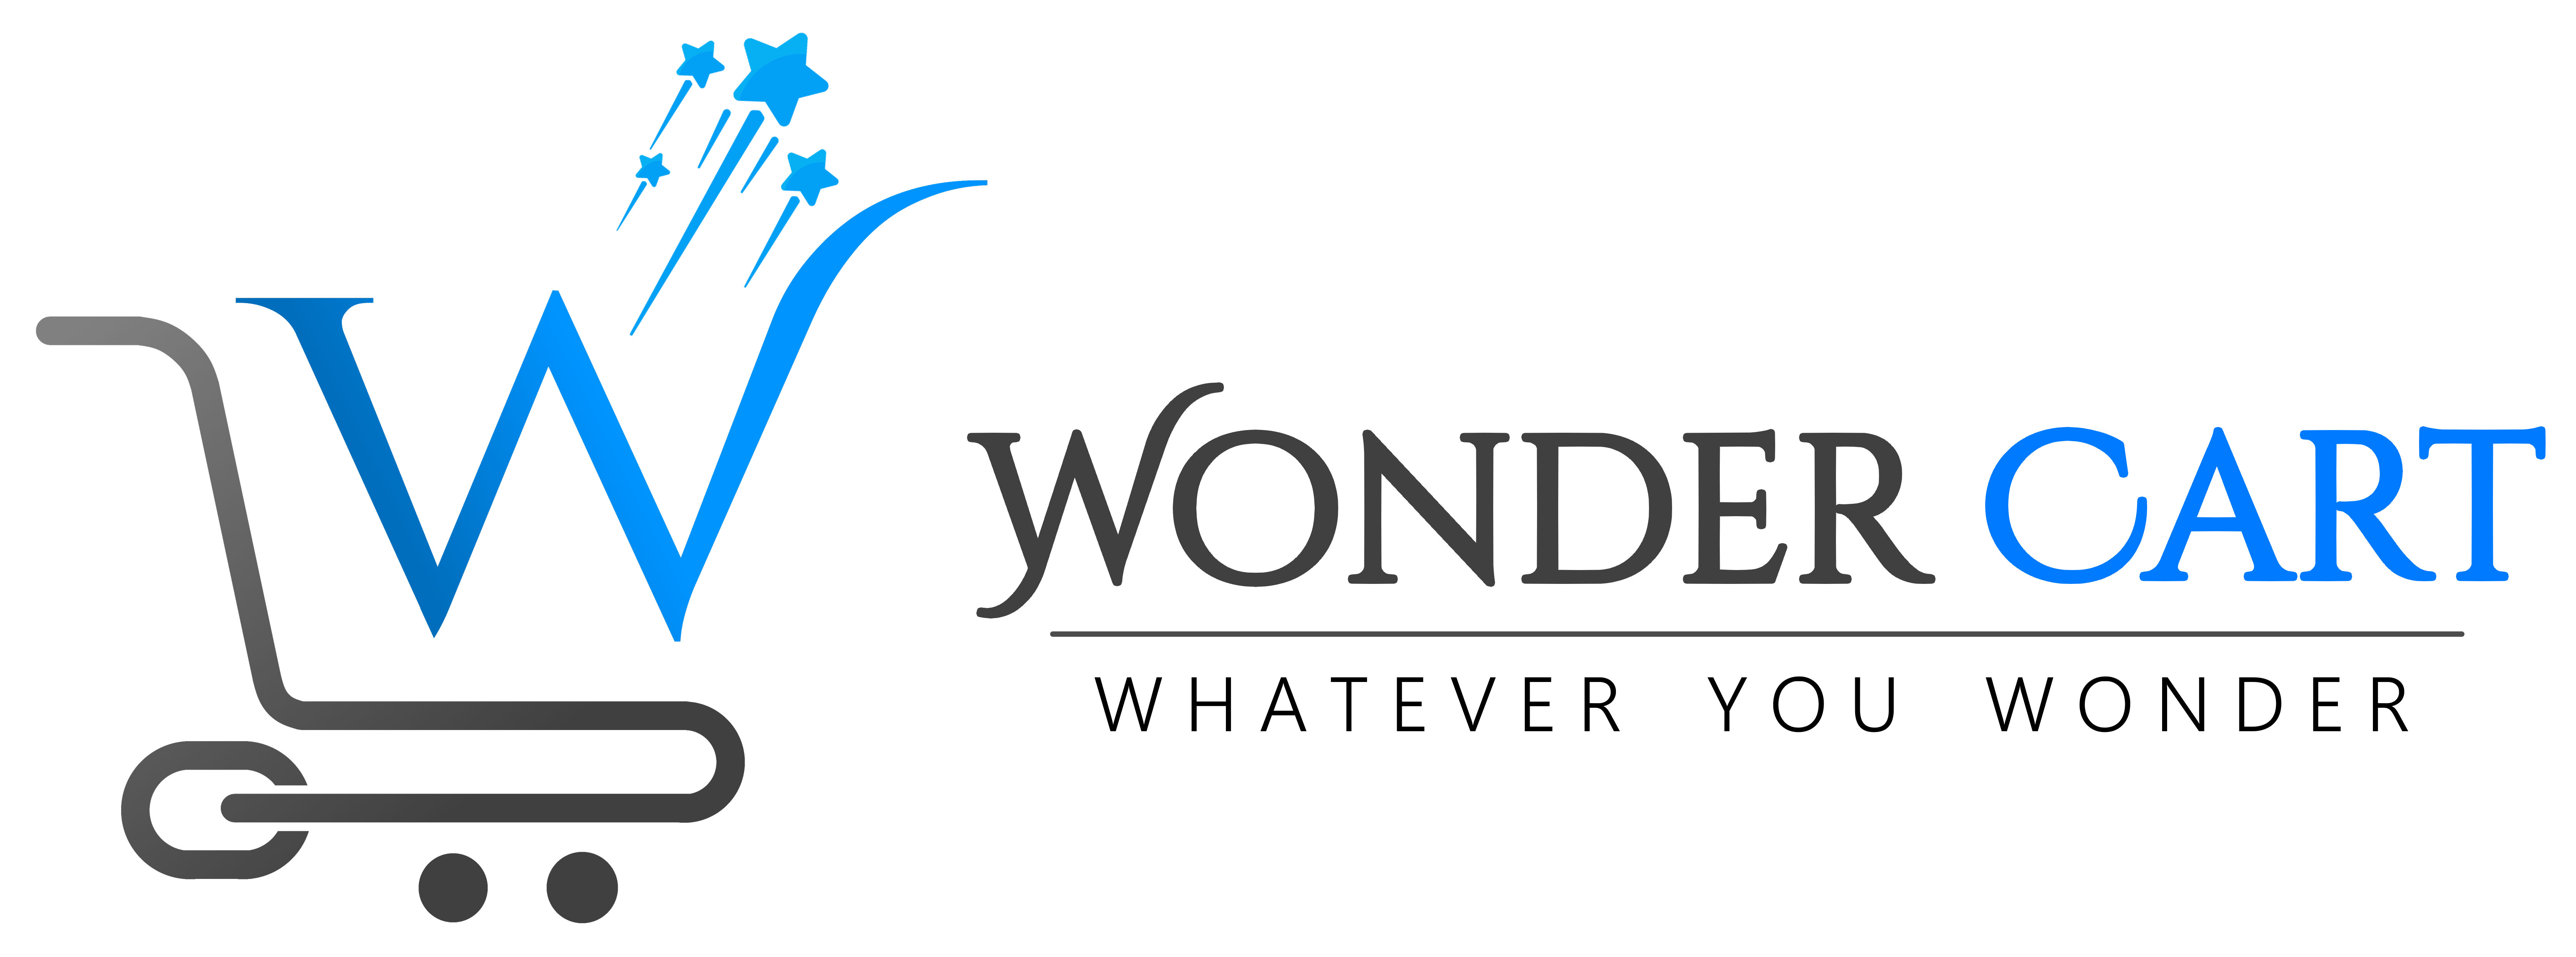 Wondercart Logo Final